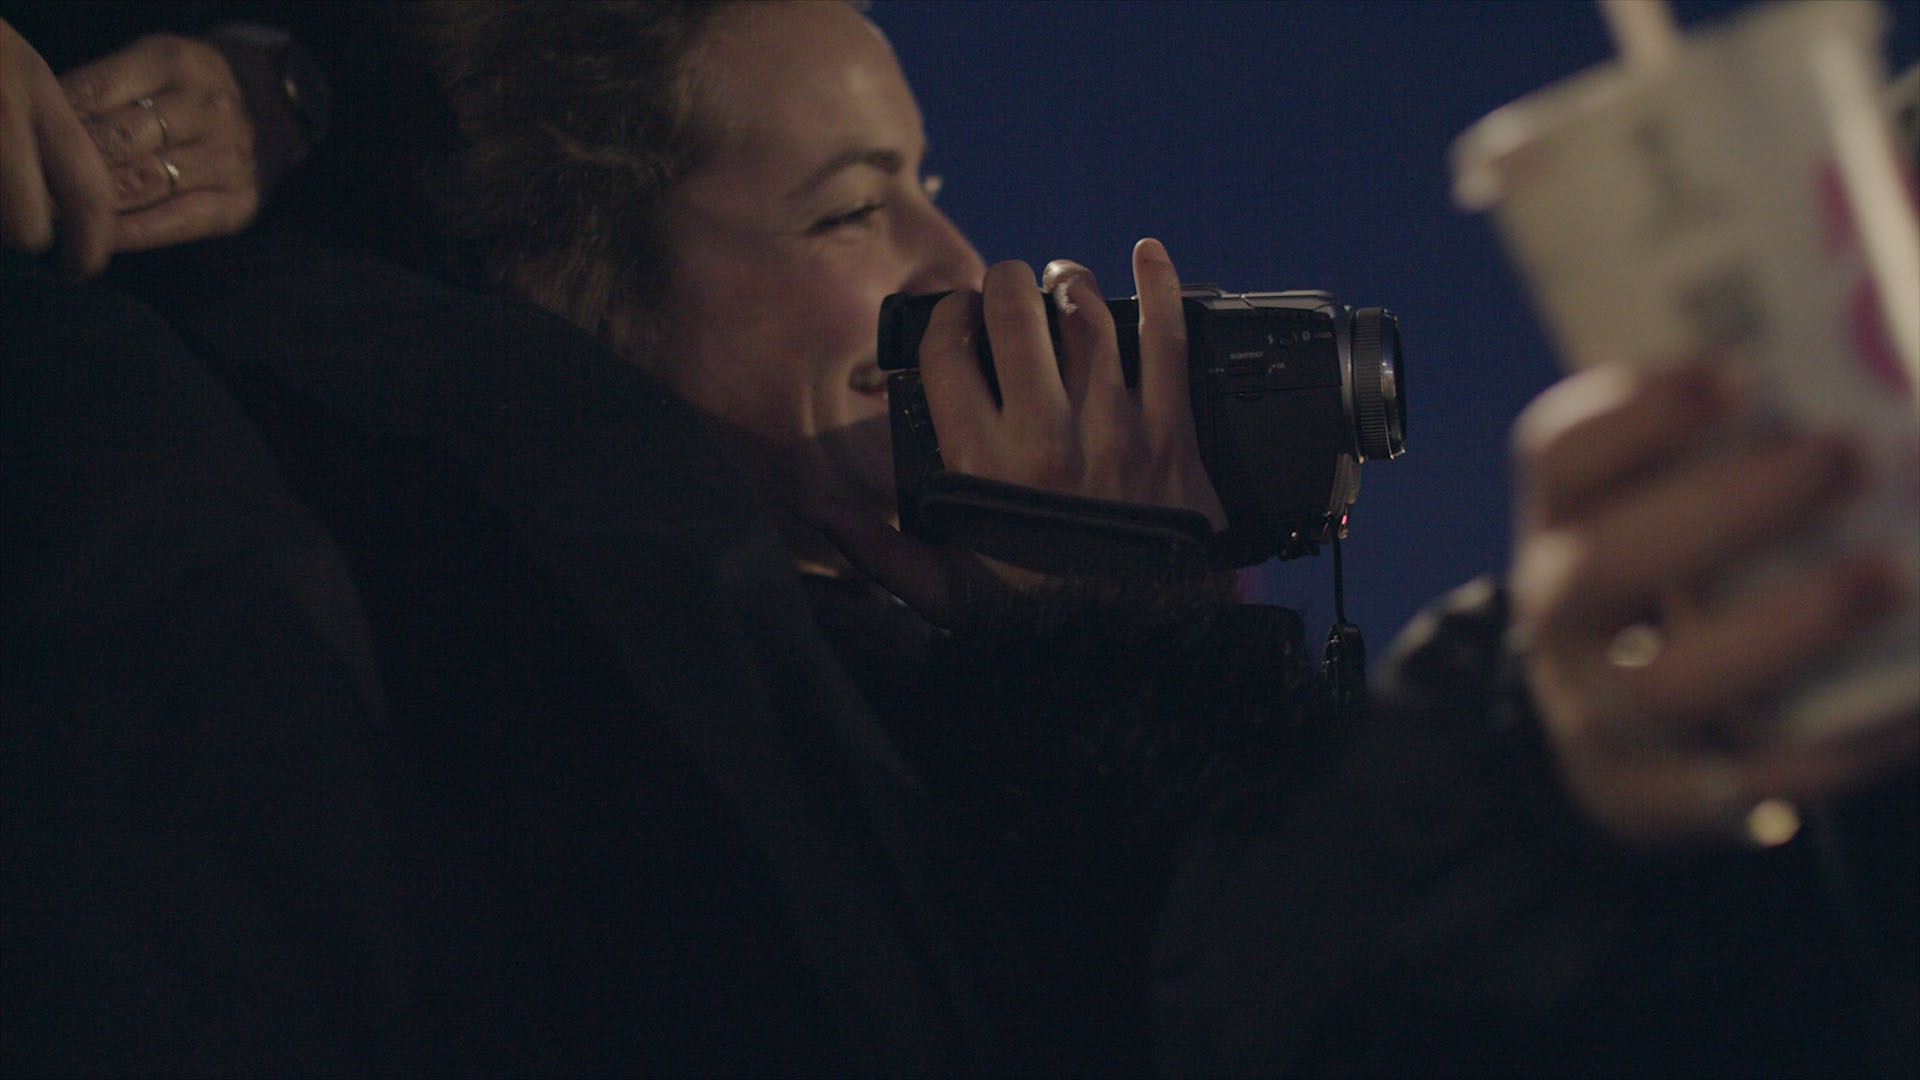 rebecca hoeft - cinematographer - Girls - documentary